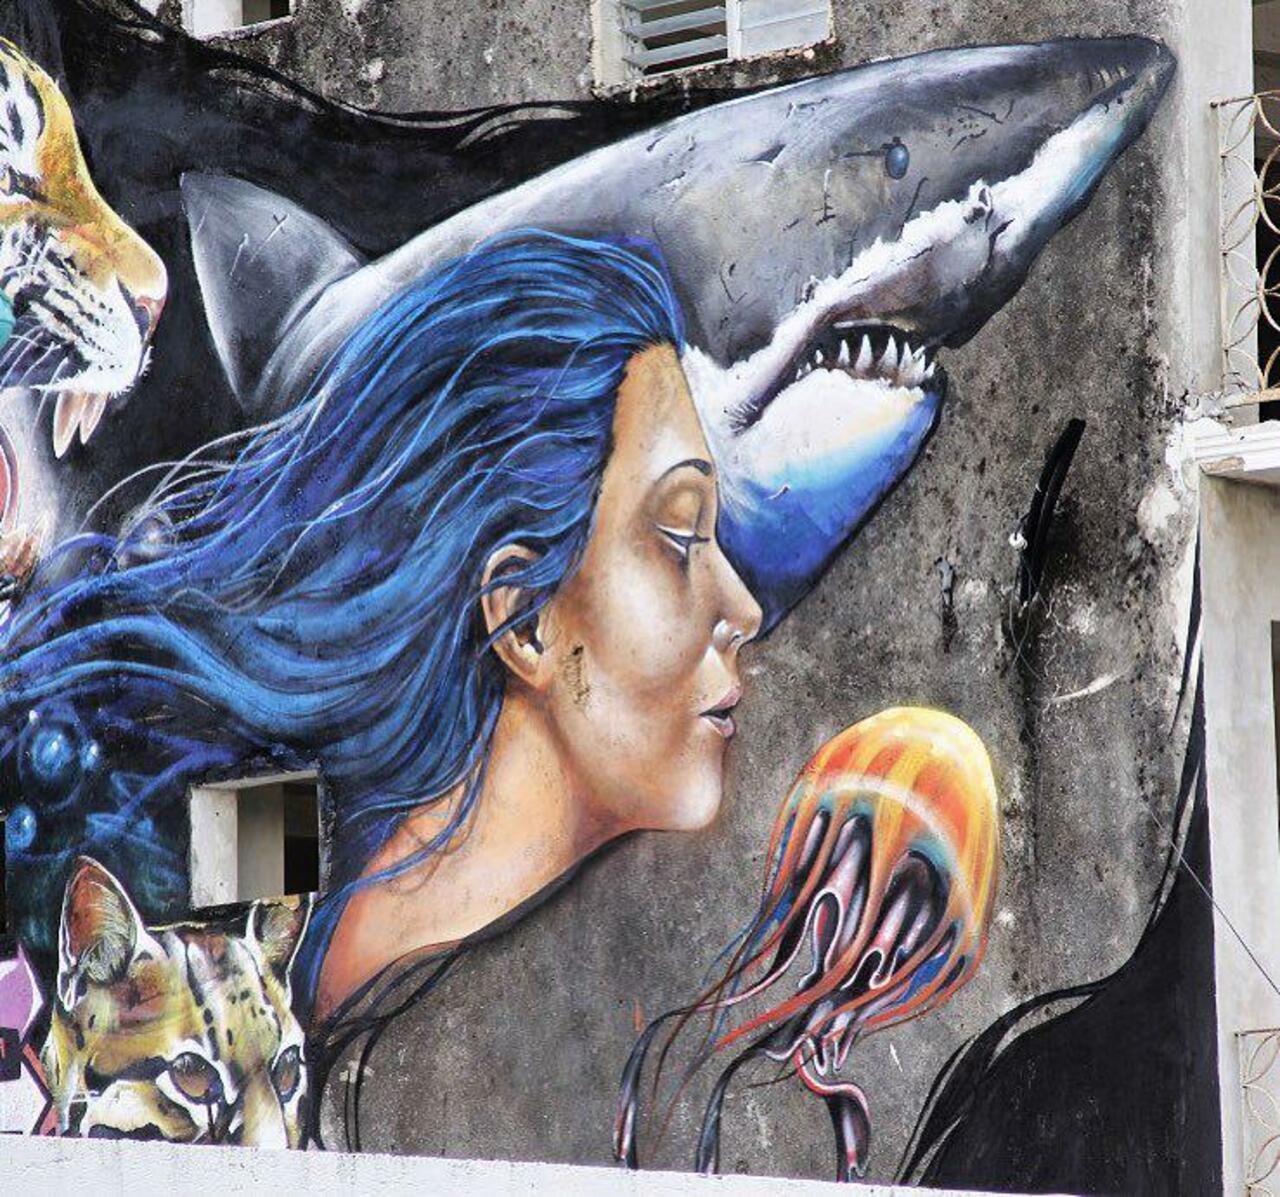 #streetart #arteurbano #urbanart #urban #art #mexico #cdmx #mexicodf #mural #graffiti #streetartmexico #urbanwalls … http://t.co/AWDVZsNPGe